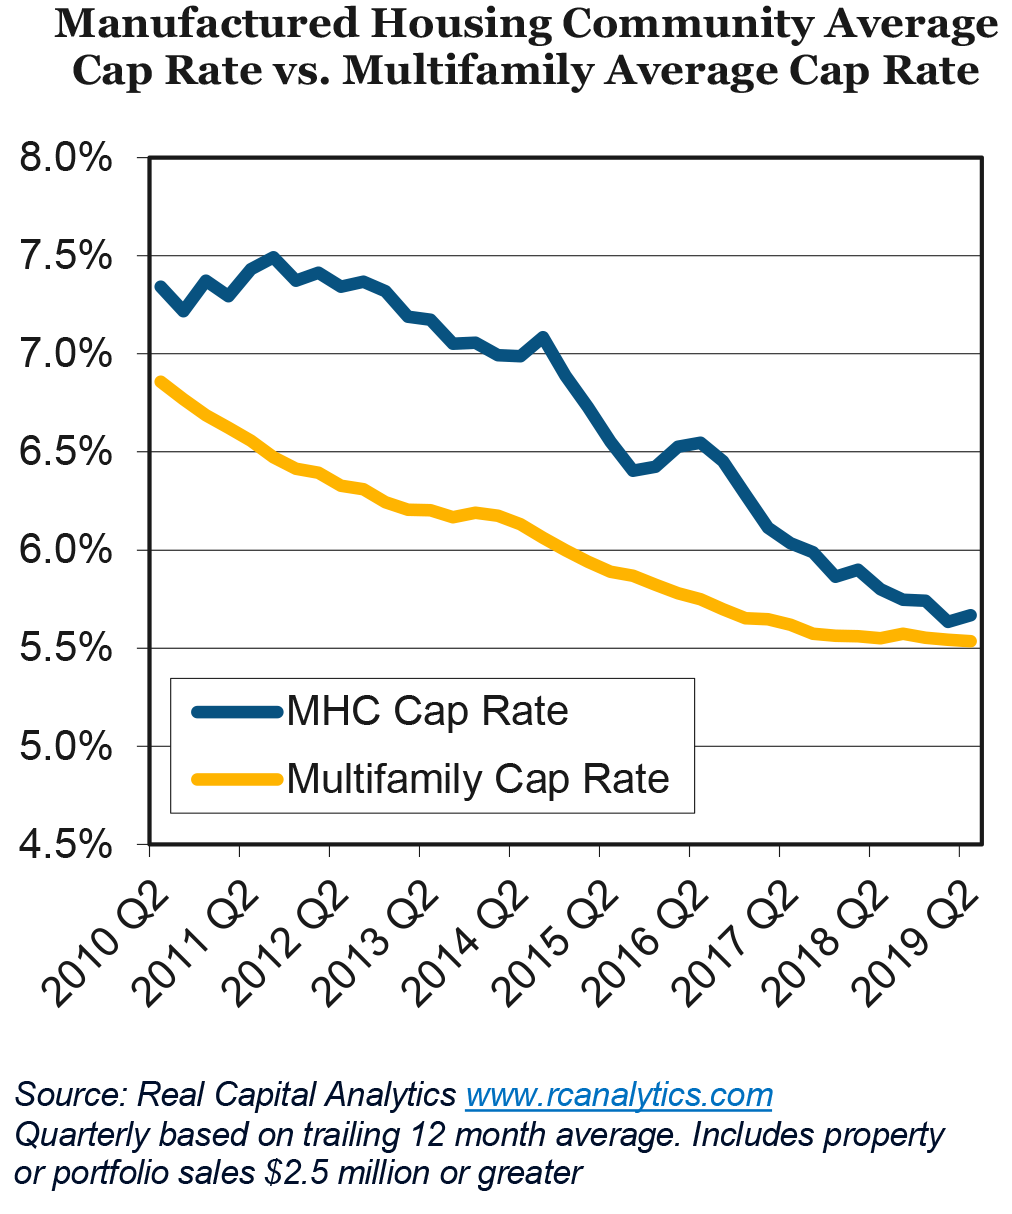 Manufactured Housing Community Average Cap Rate vs. Multifamily Average Cap Rate